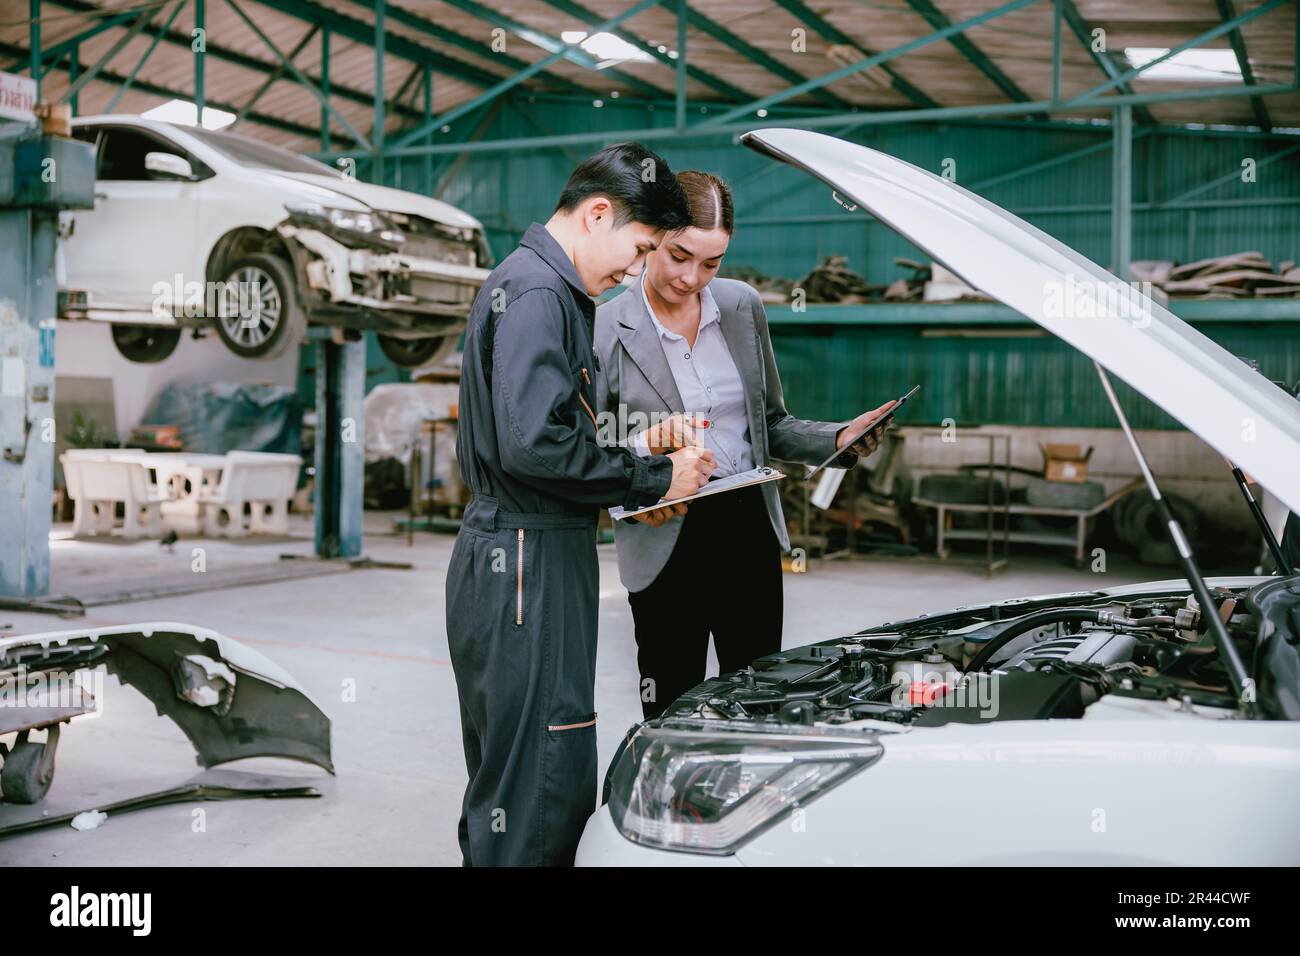 People working estimate repair cost in auto shop. Garage business owner car insurance claim team for help service fix repair broken car. Stock Photo